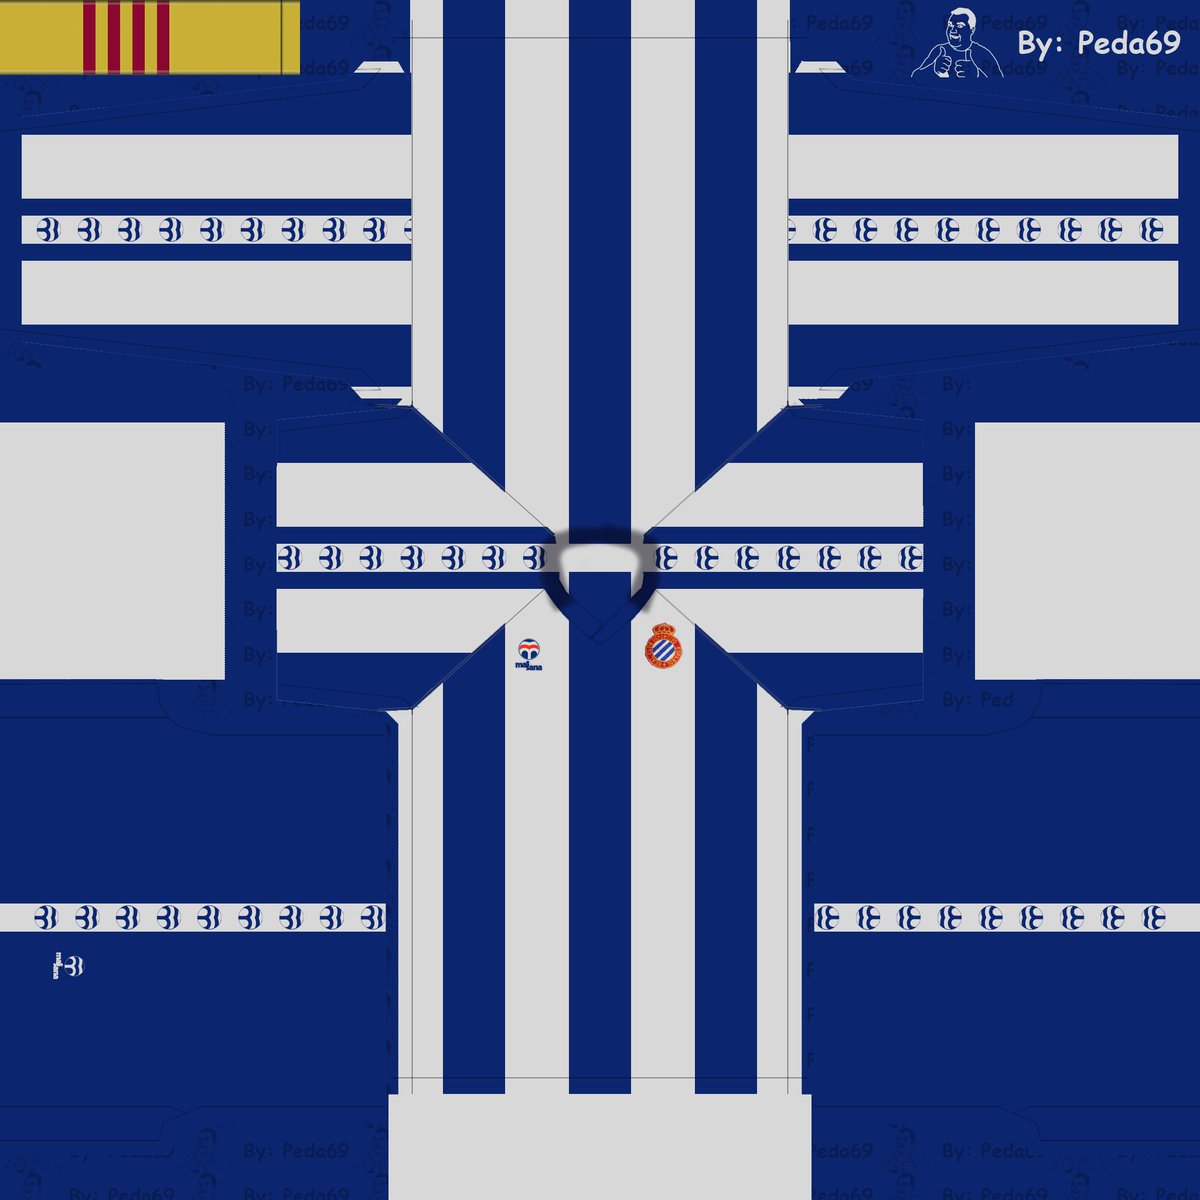 Peda69™ Classic on Twitter: "RCD Espanyol local / visitante subidas Drive. #PES2018 #PES2019 https://t.co/jnp4ihAgwI" / Twitter